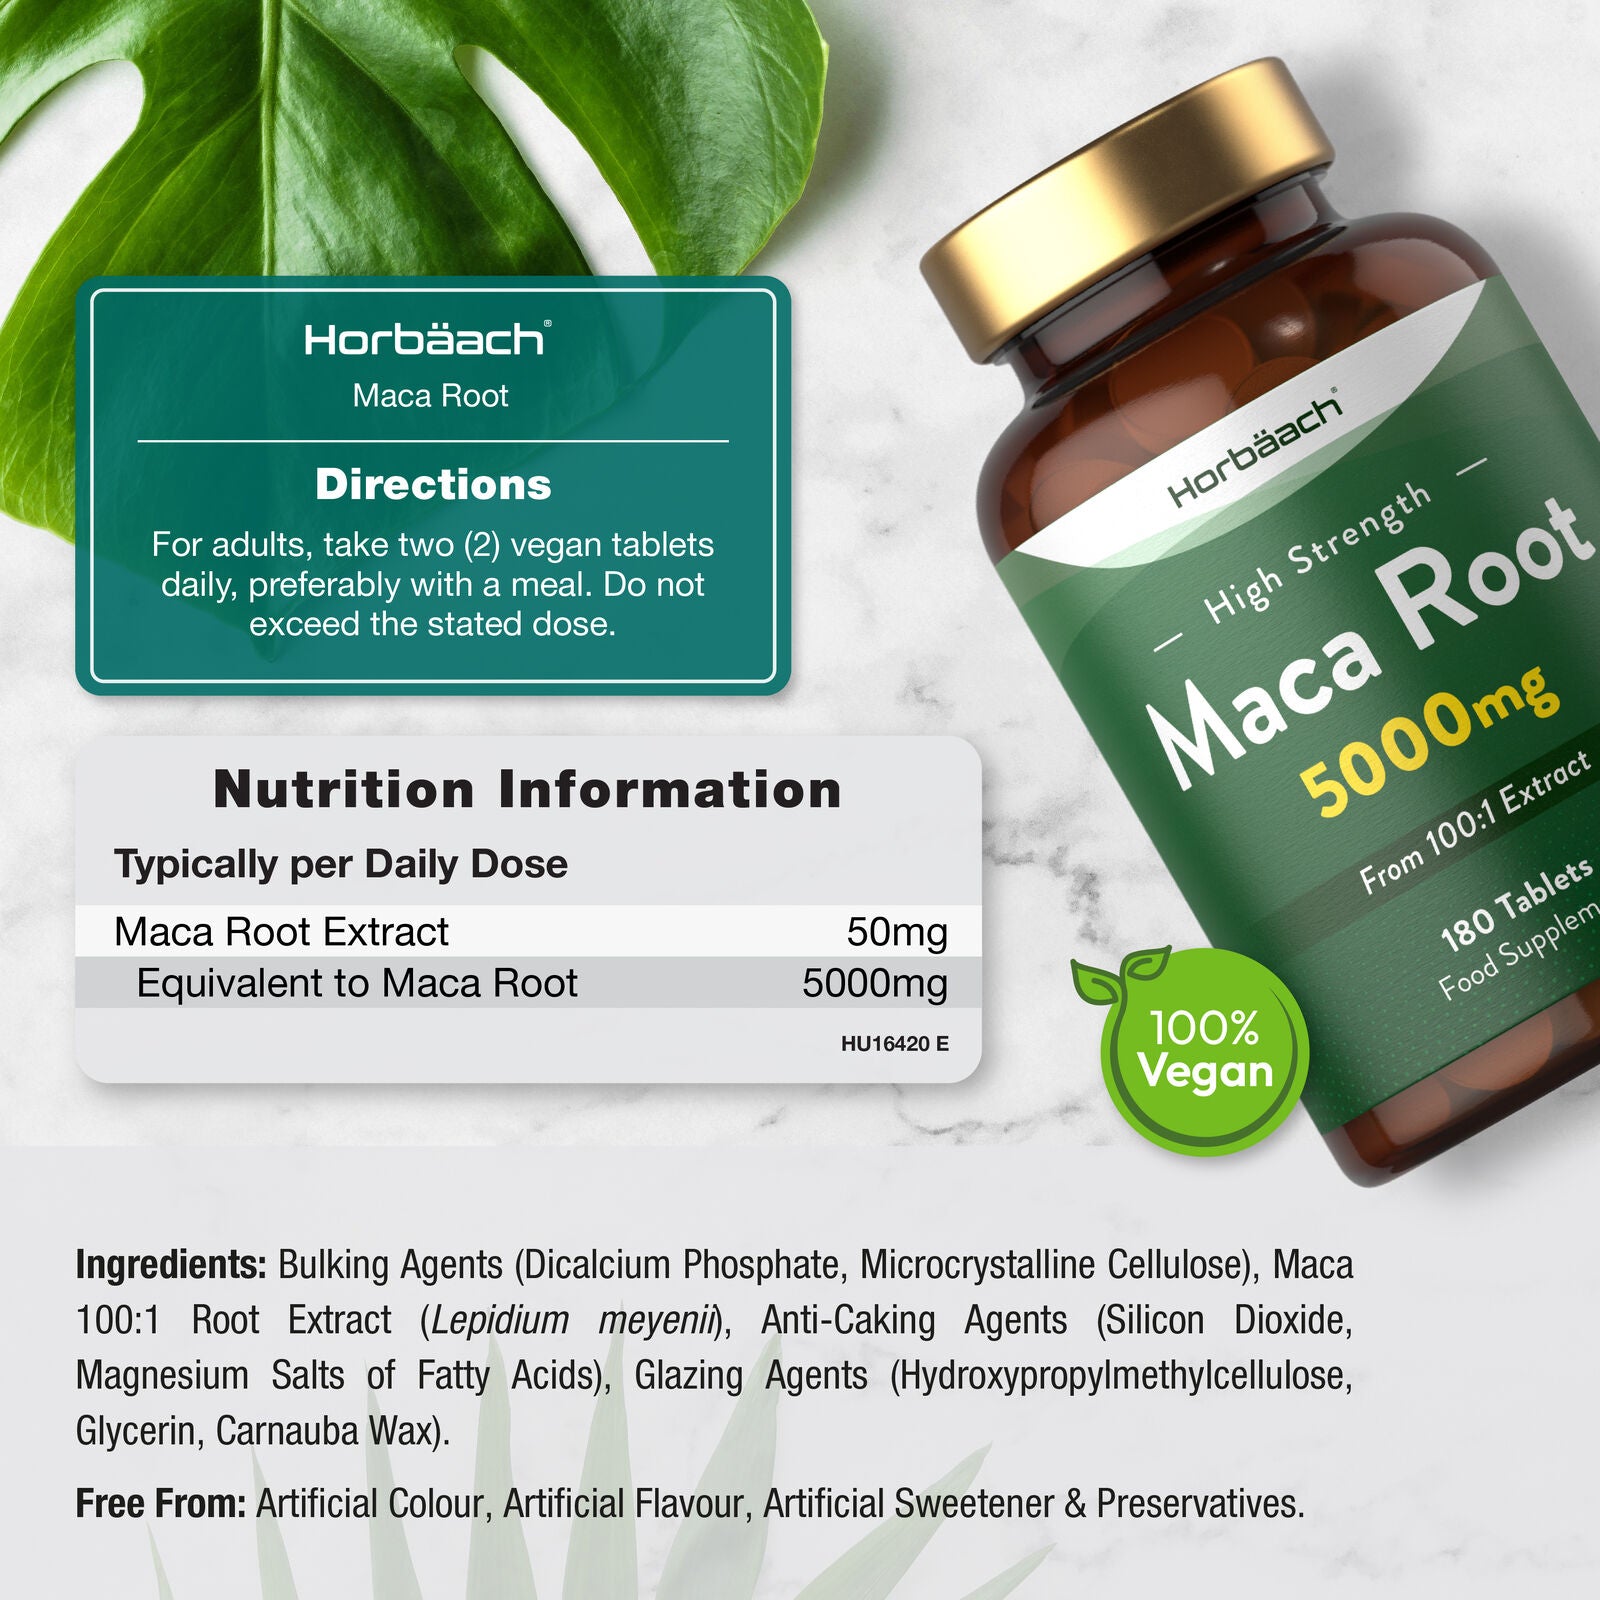 Maca Root 5000 mg | 180 Tablets